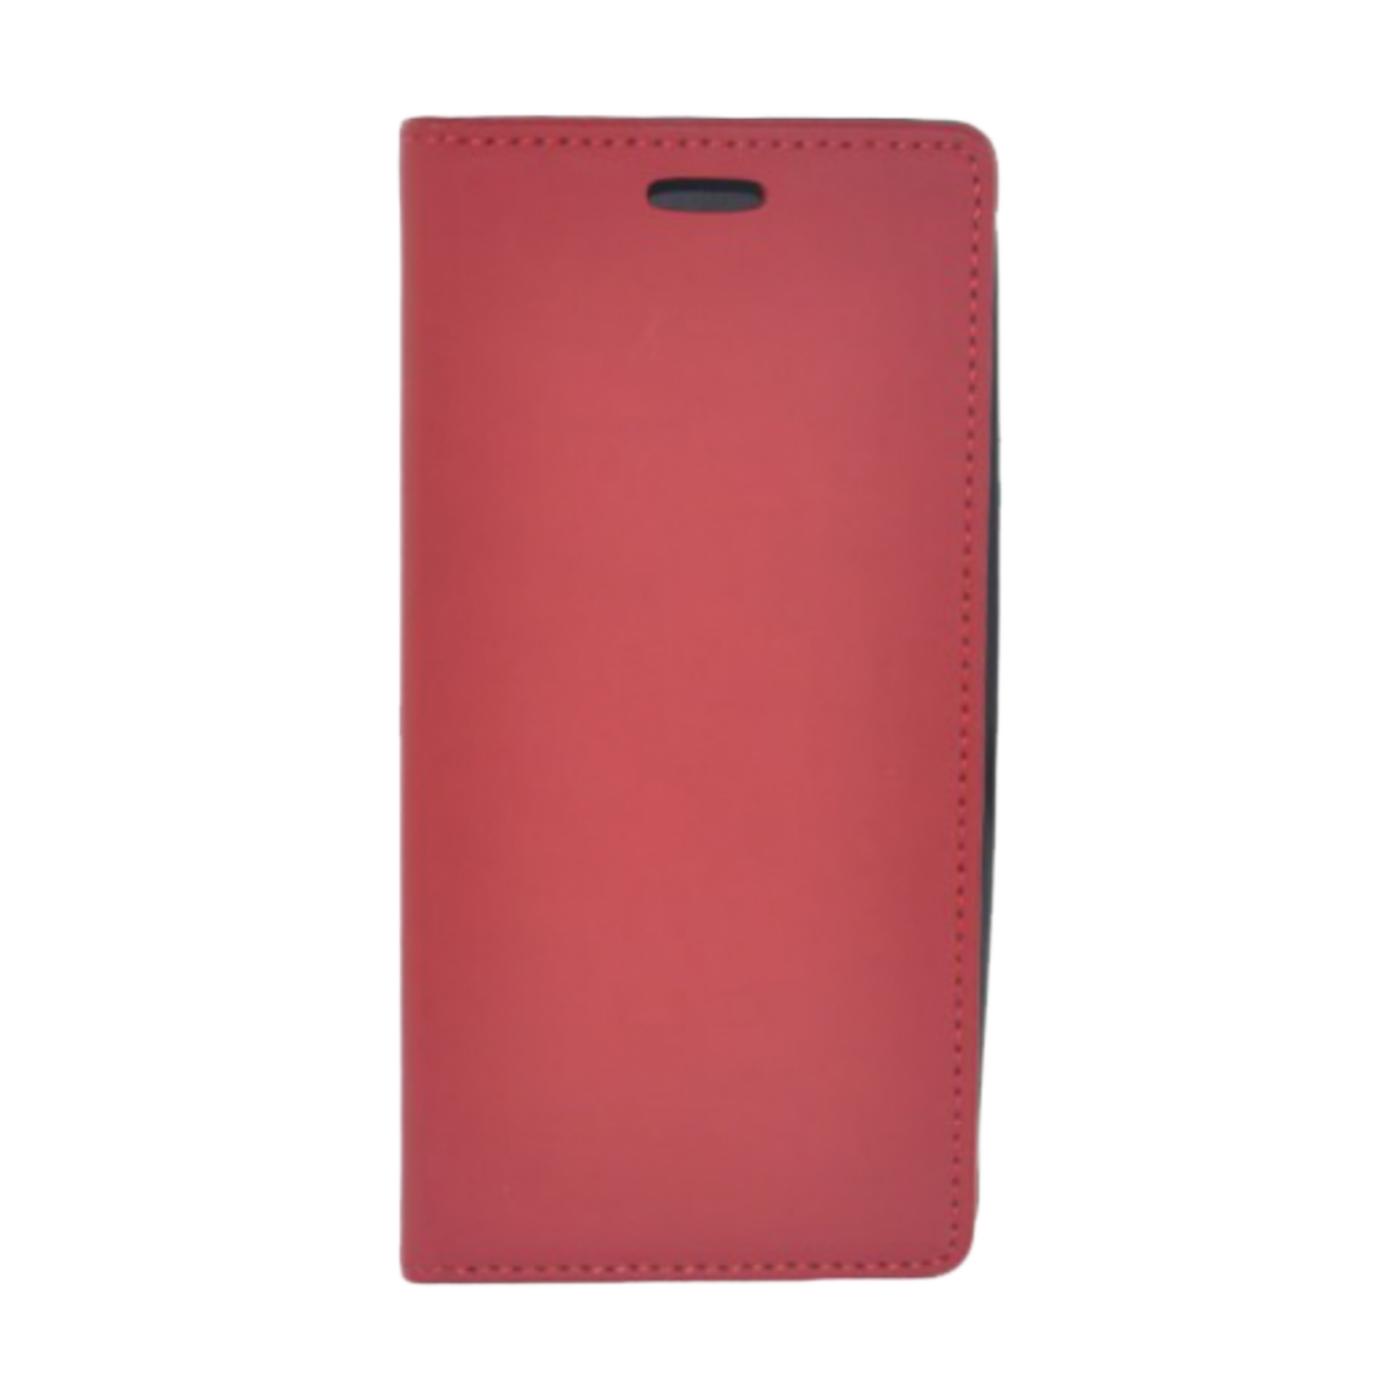 Futrola za mobitel Huawei P8, crvena